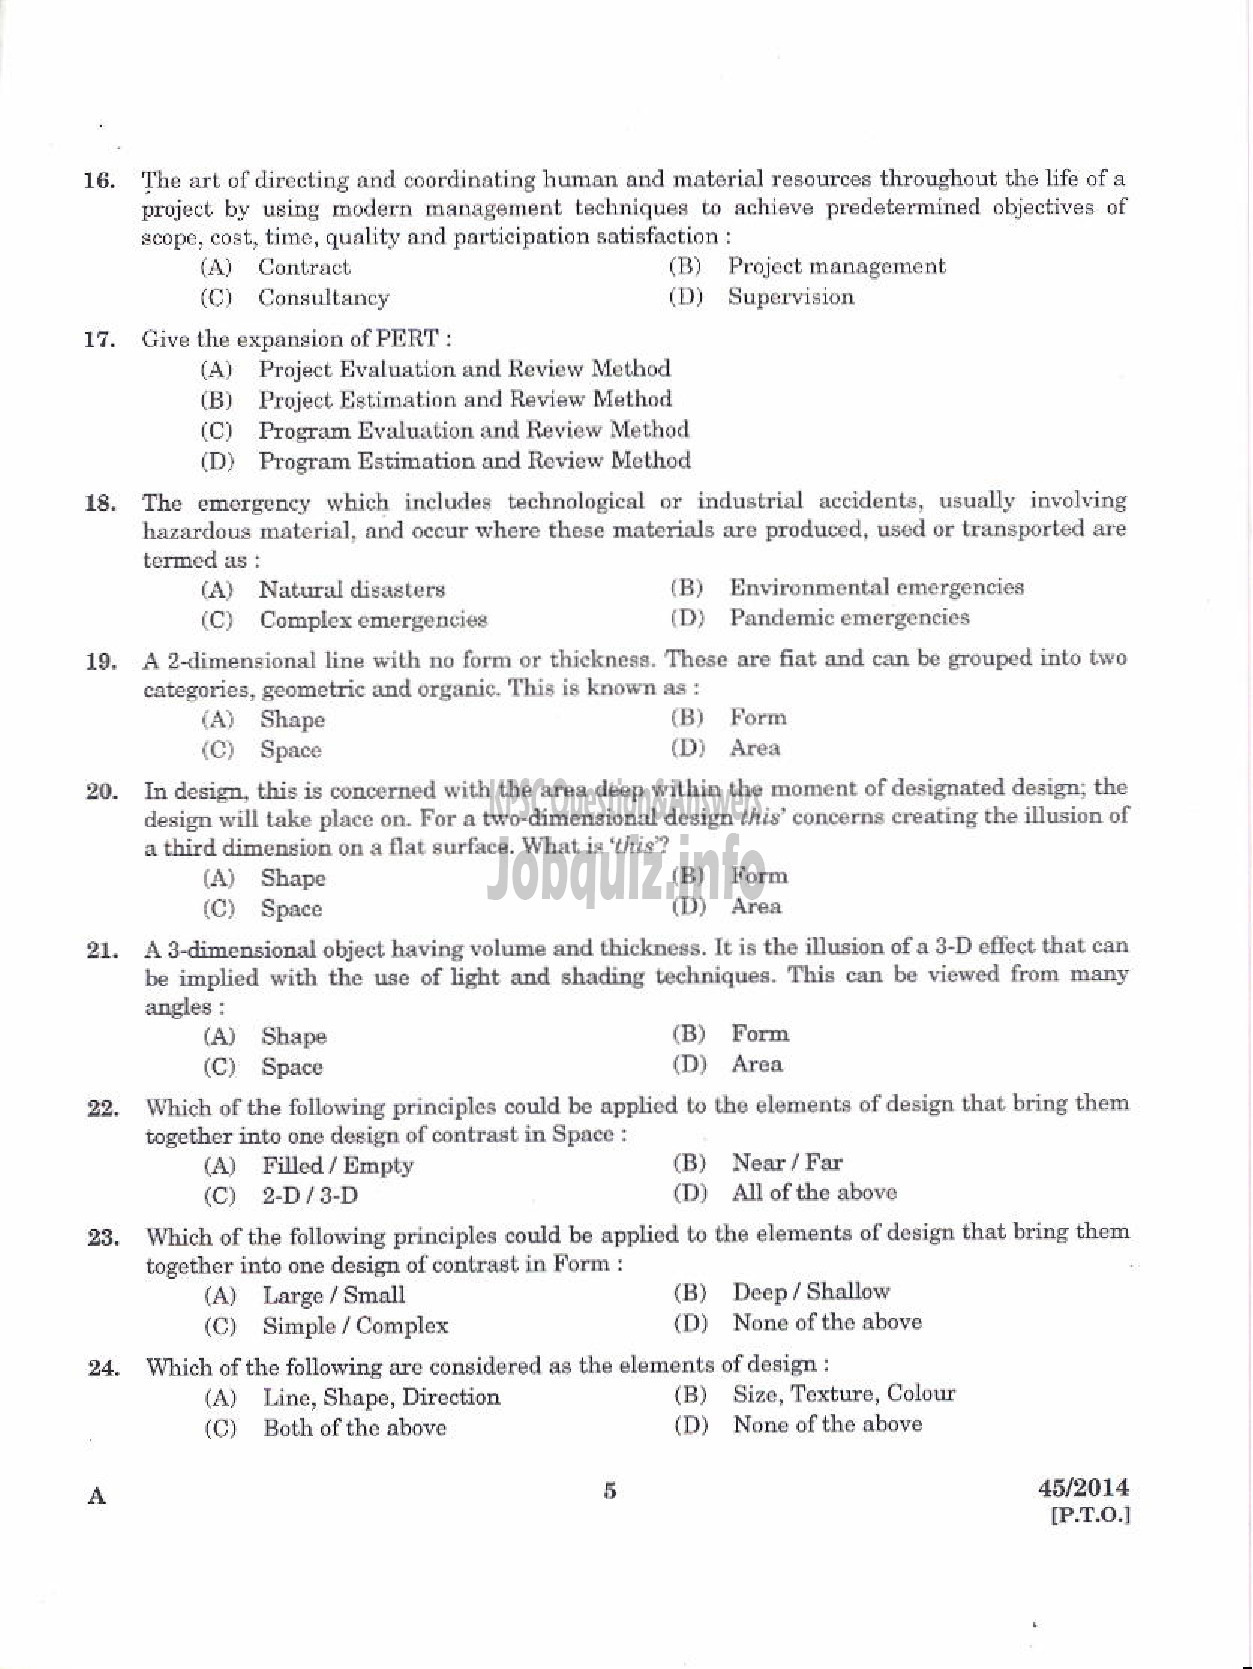 Kerala PSC Question Paper - ARCHITECTURAL HEAD DRAFTSMAN KERALA STATE HOUSING BOARD-3